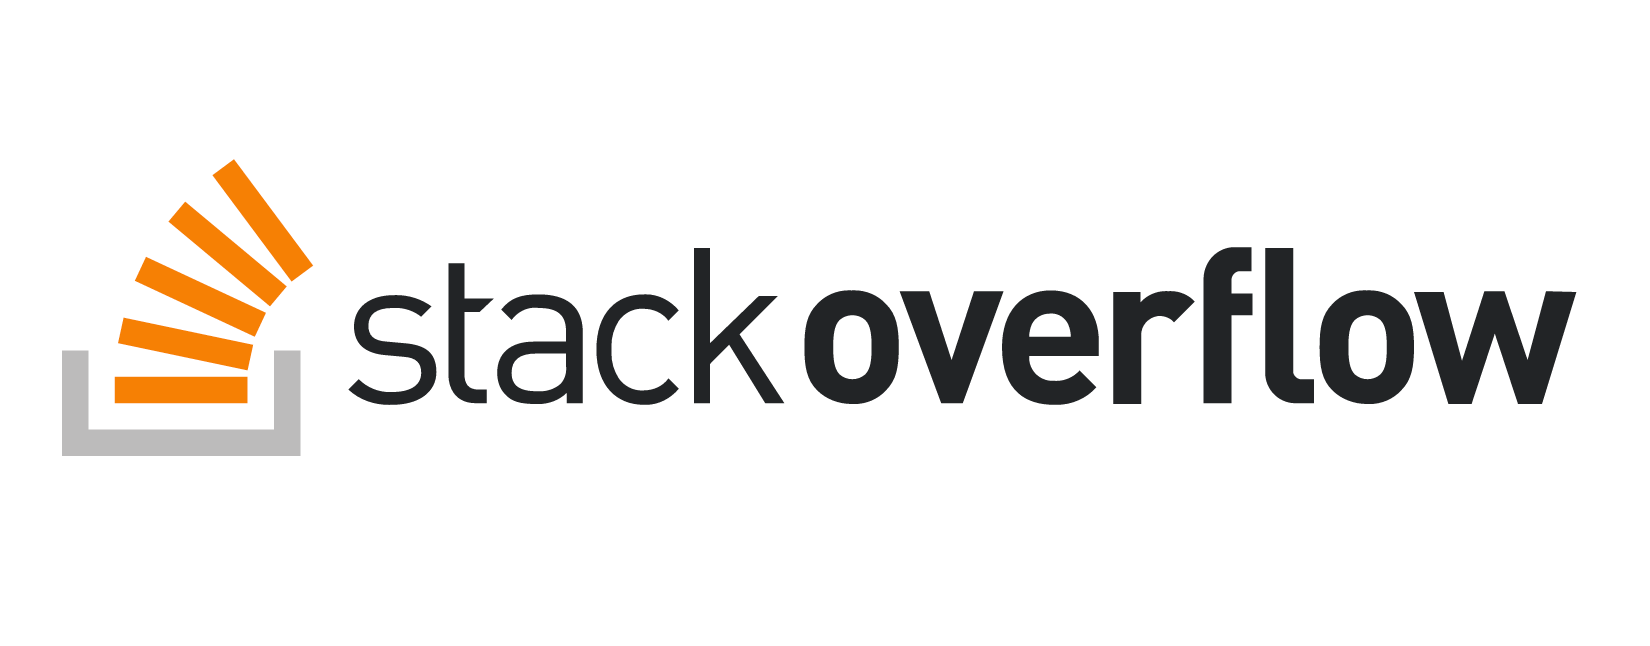 stack-overflow-1